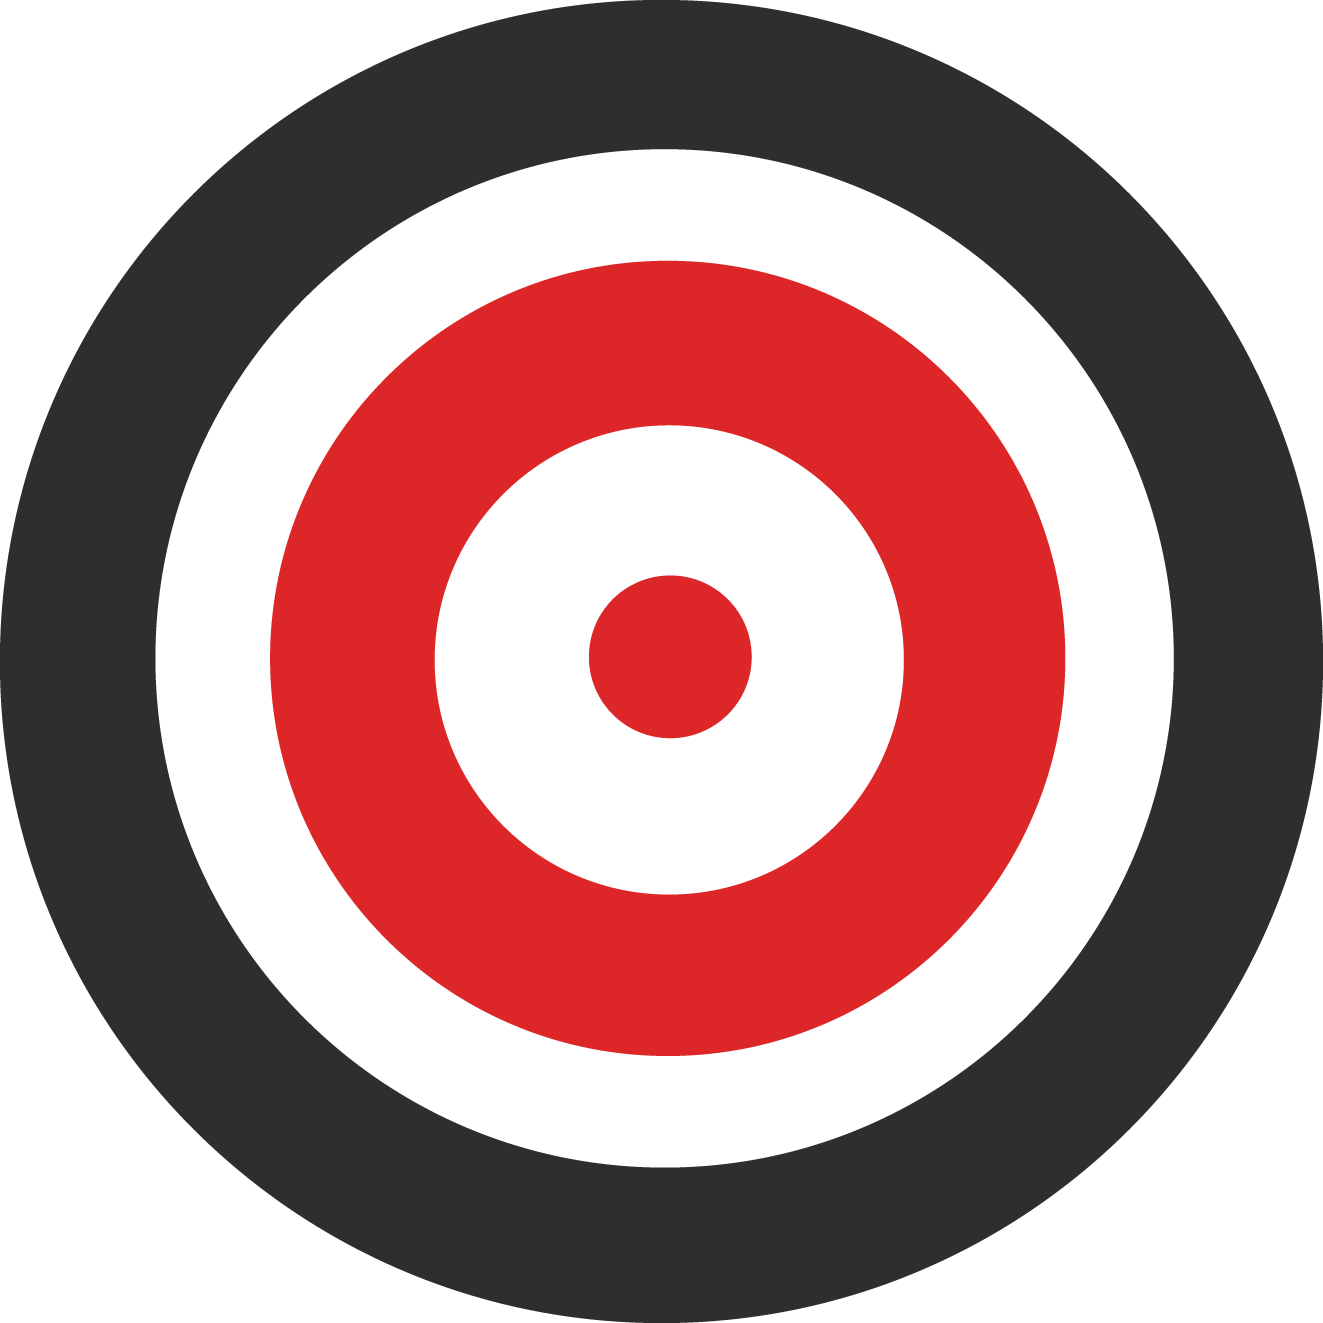 Target Png - Target Bullseye, Transparent background PNG HD thumbnail